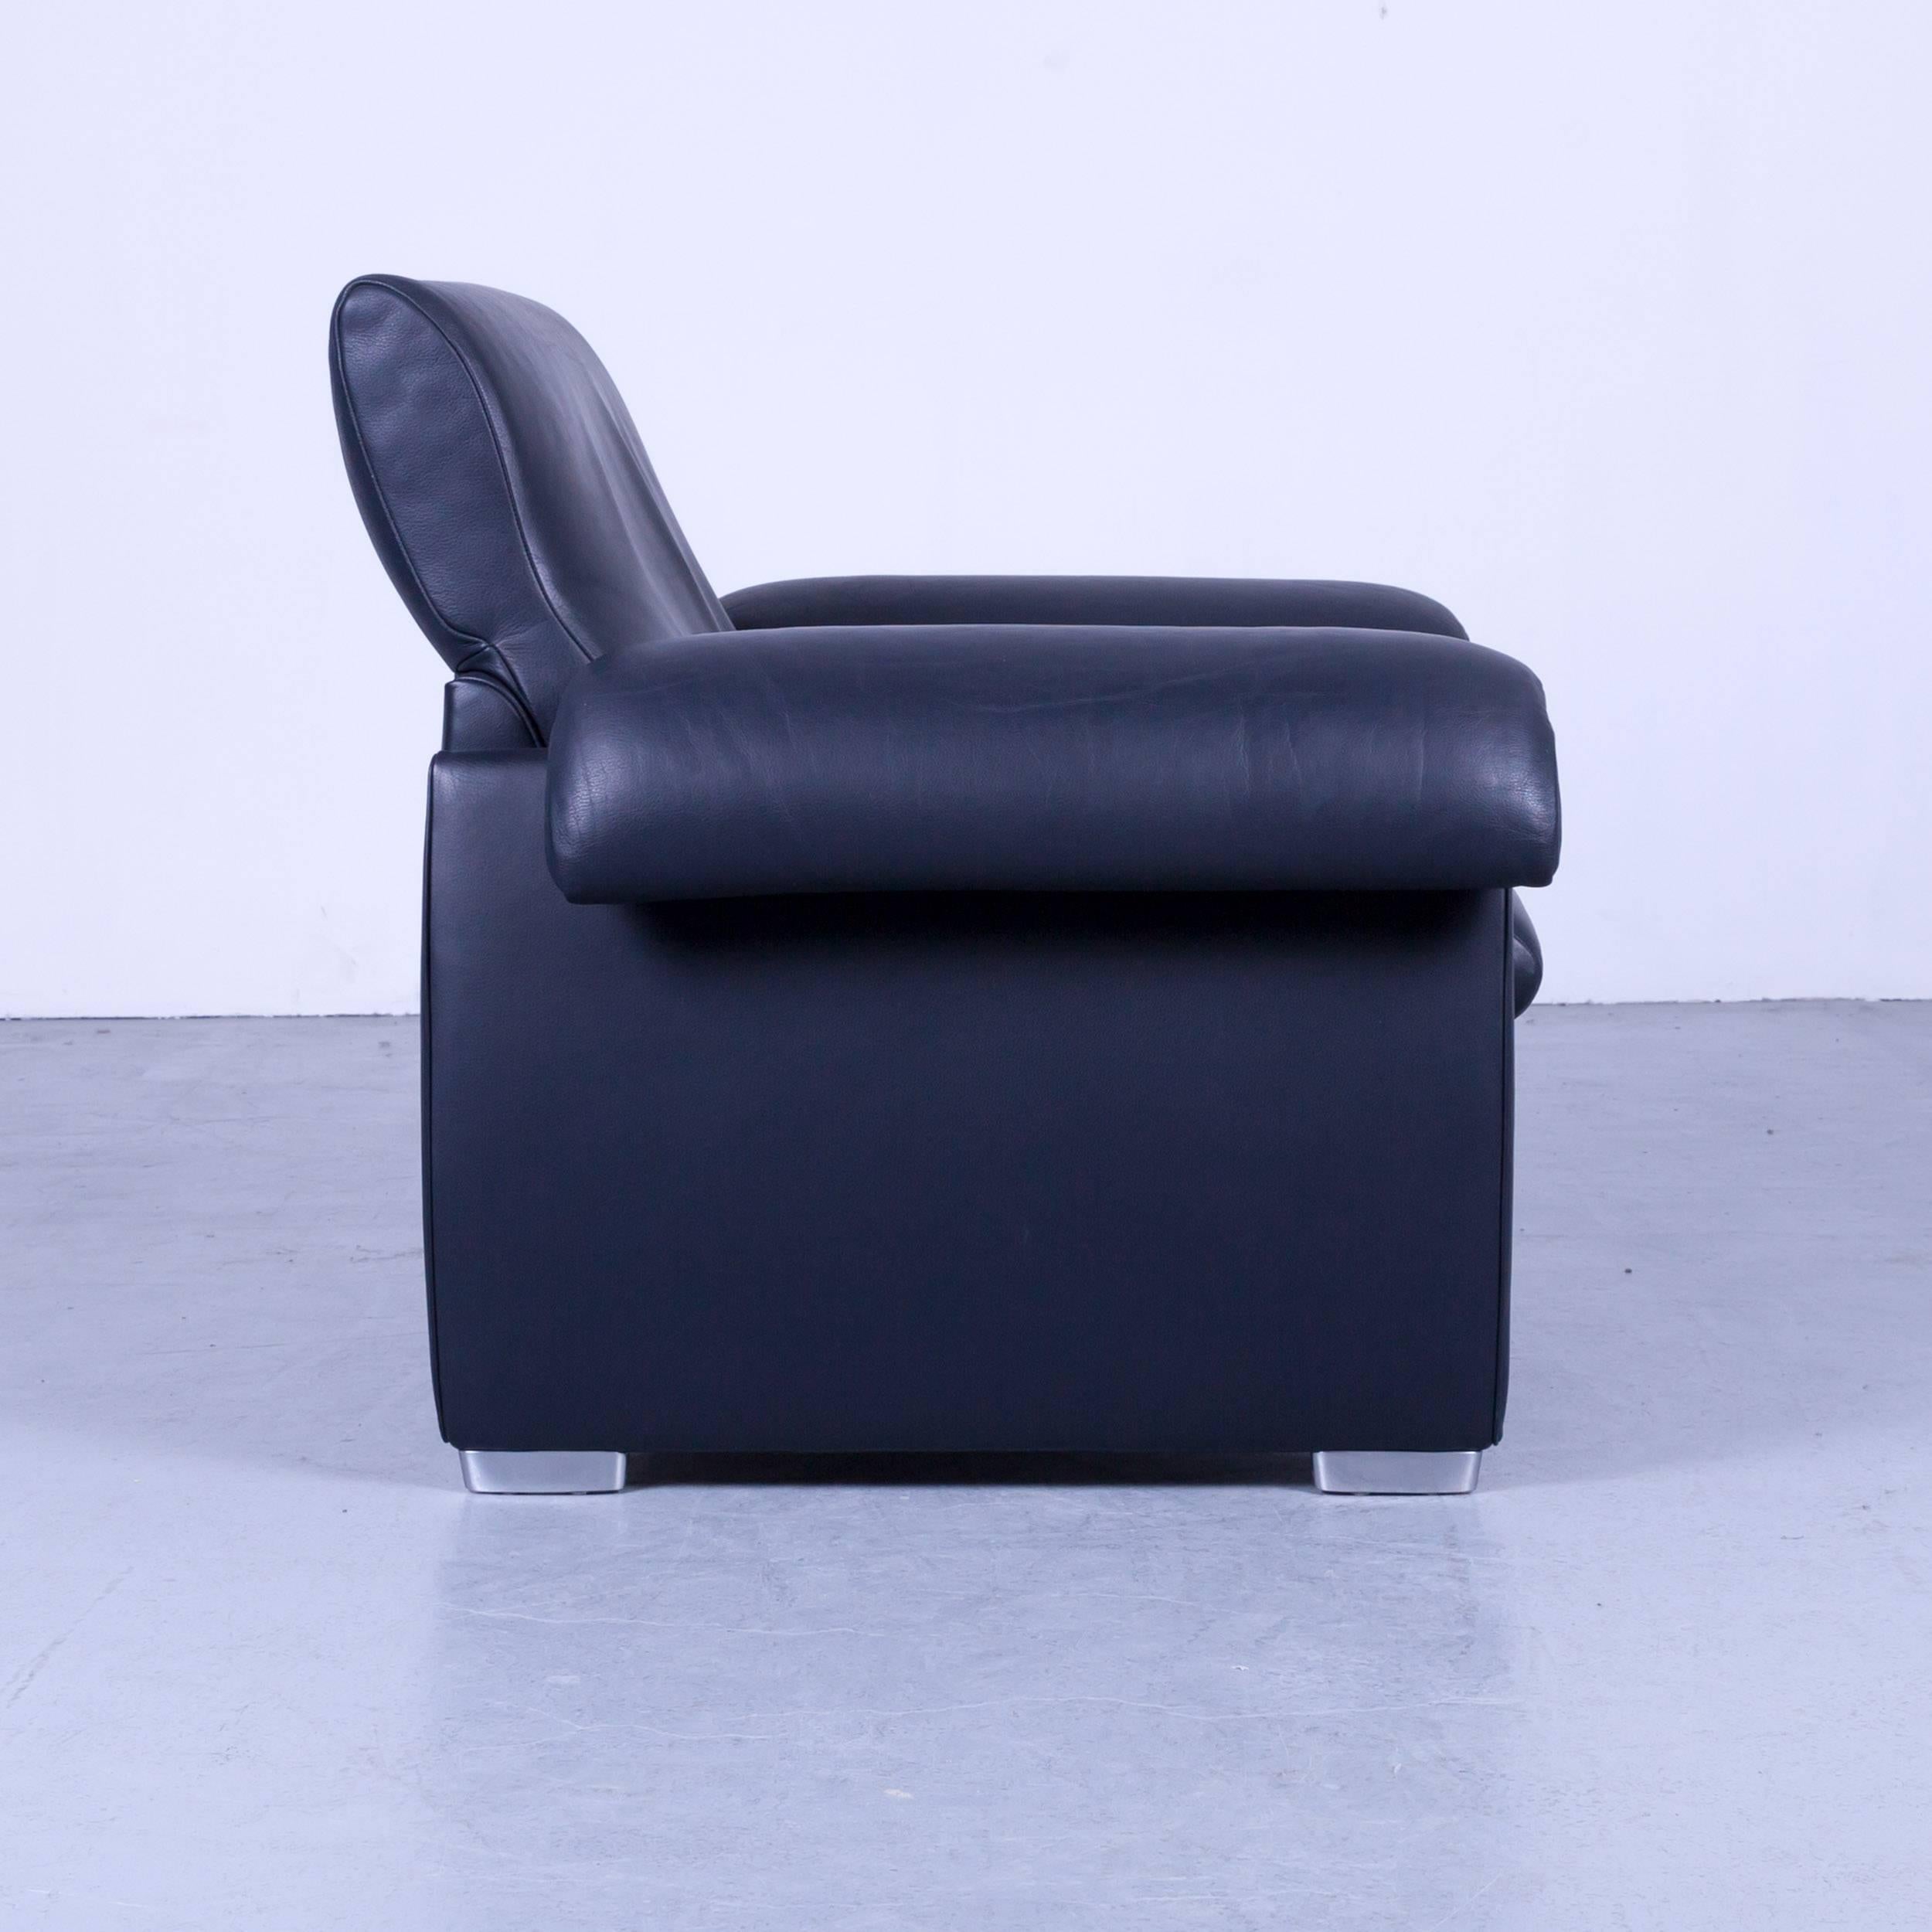 Swiss de Sede DS 10 Designer Leather Armchair Dark Navy Blue One-Seat from Switzerland